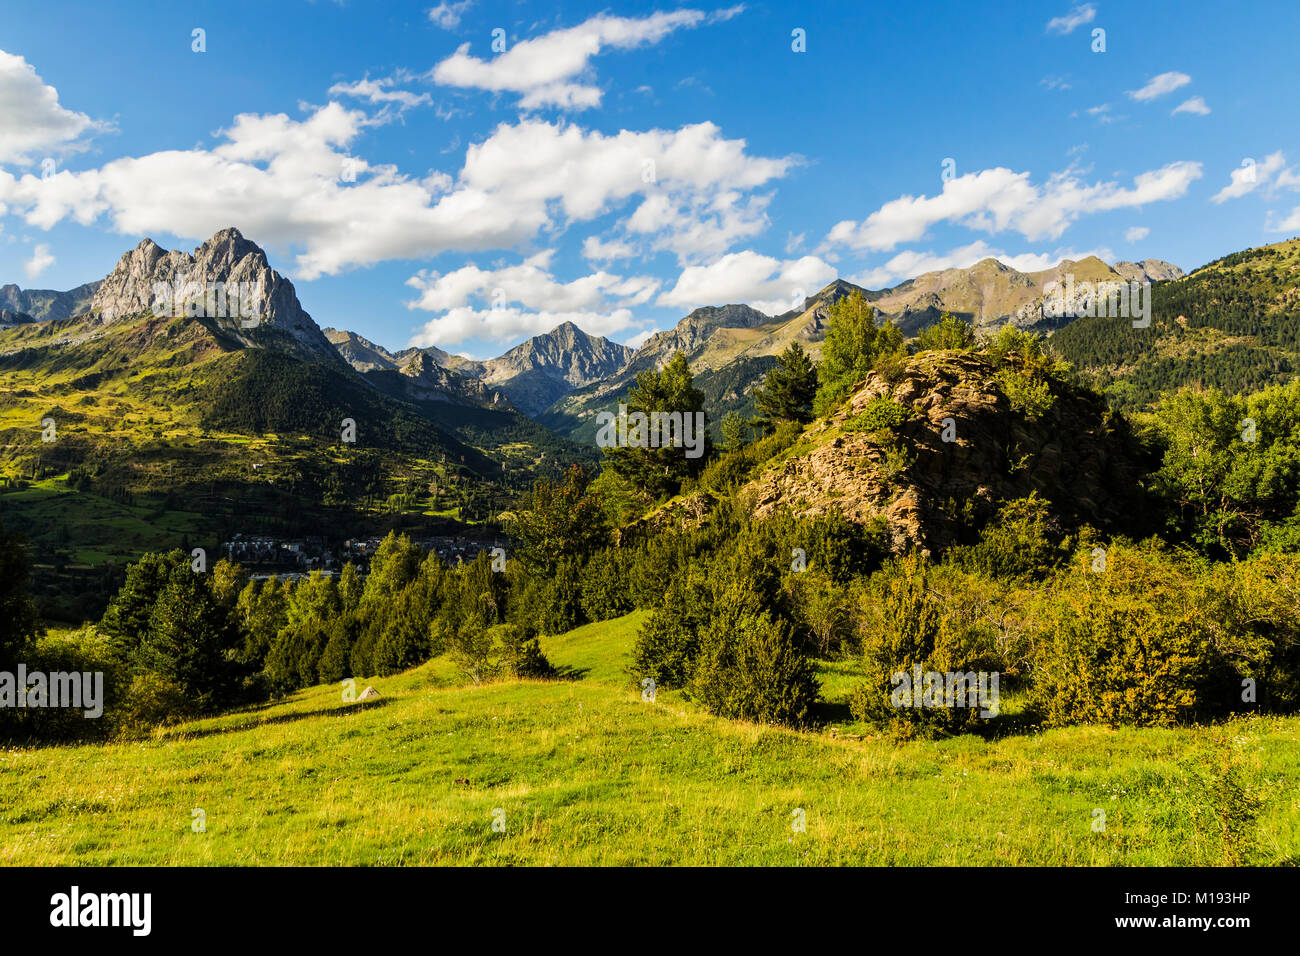 Punta del Pazino Wiesen & Beyond: 2341 m Pena Foratata (links) & Garmo Carnizero Peaks, Obere Tena Tal. Sallent de Gallego; Pyrenäen Huesca, Spanien Stockfoto